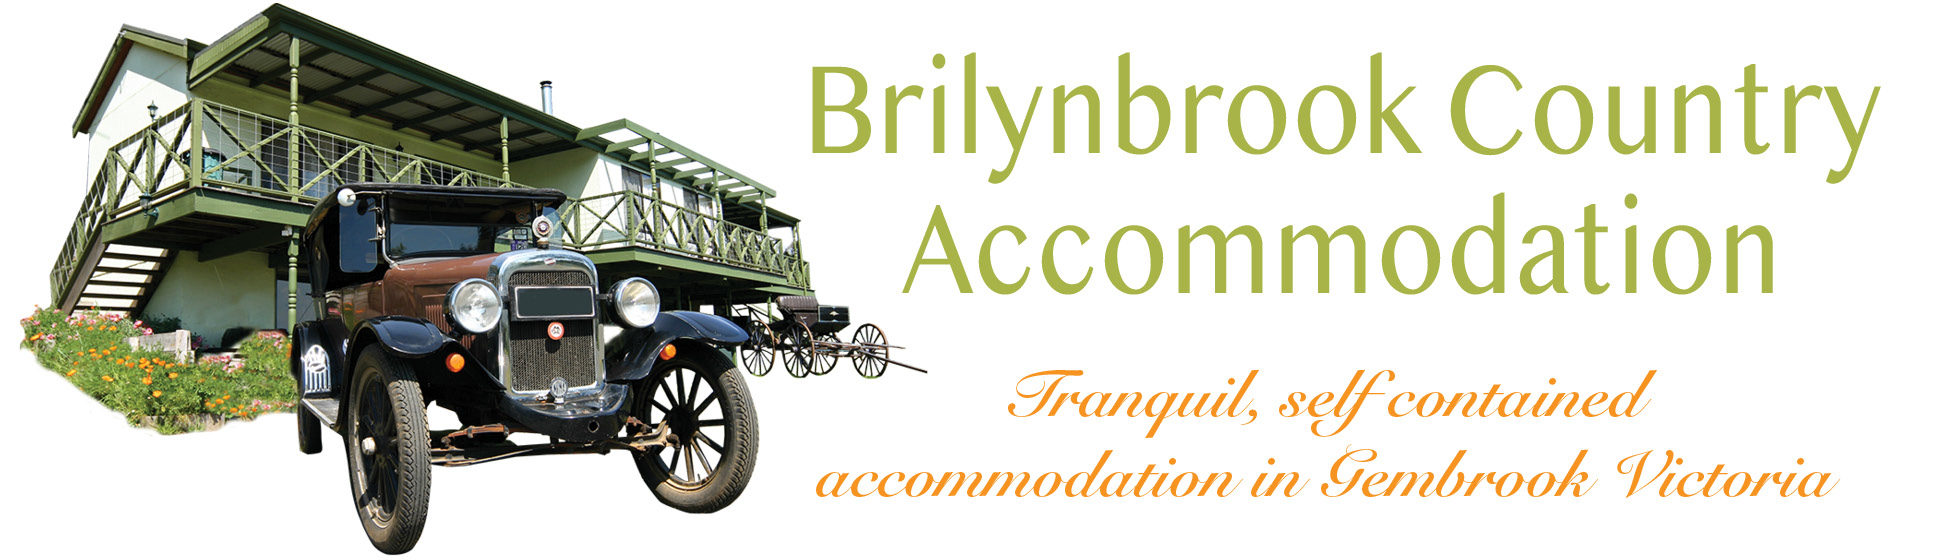 Brilynbrook Accommodation